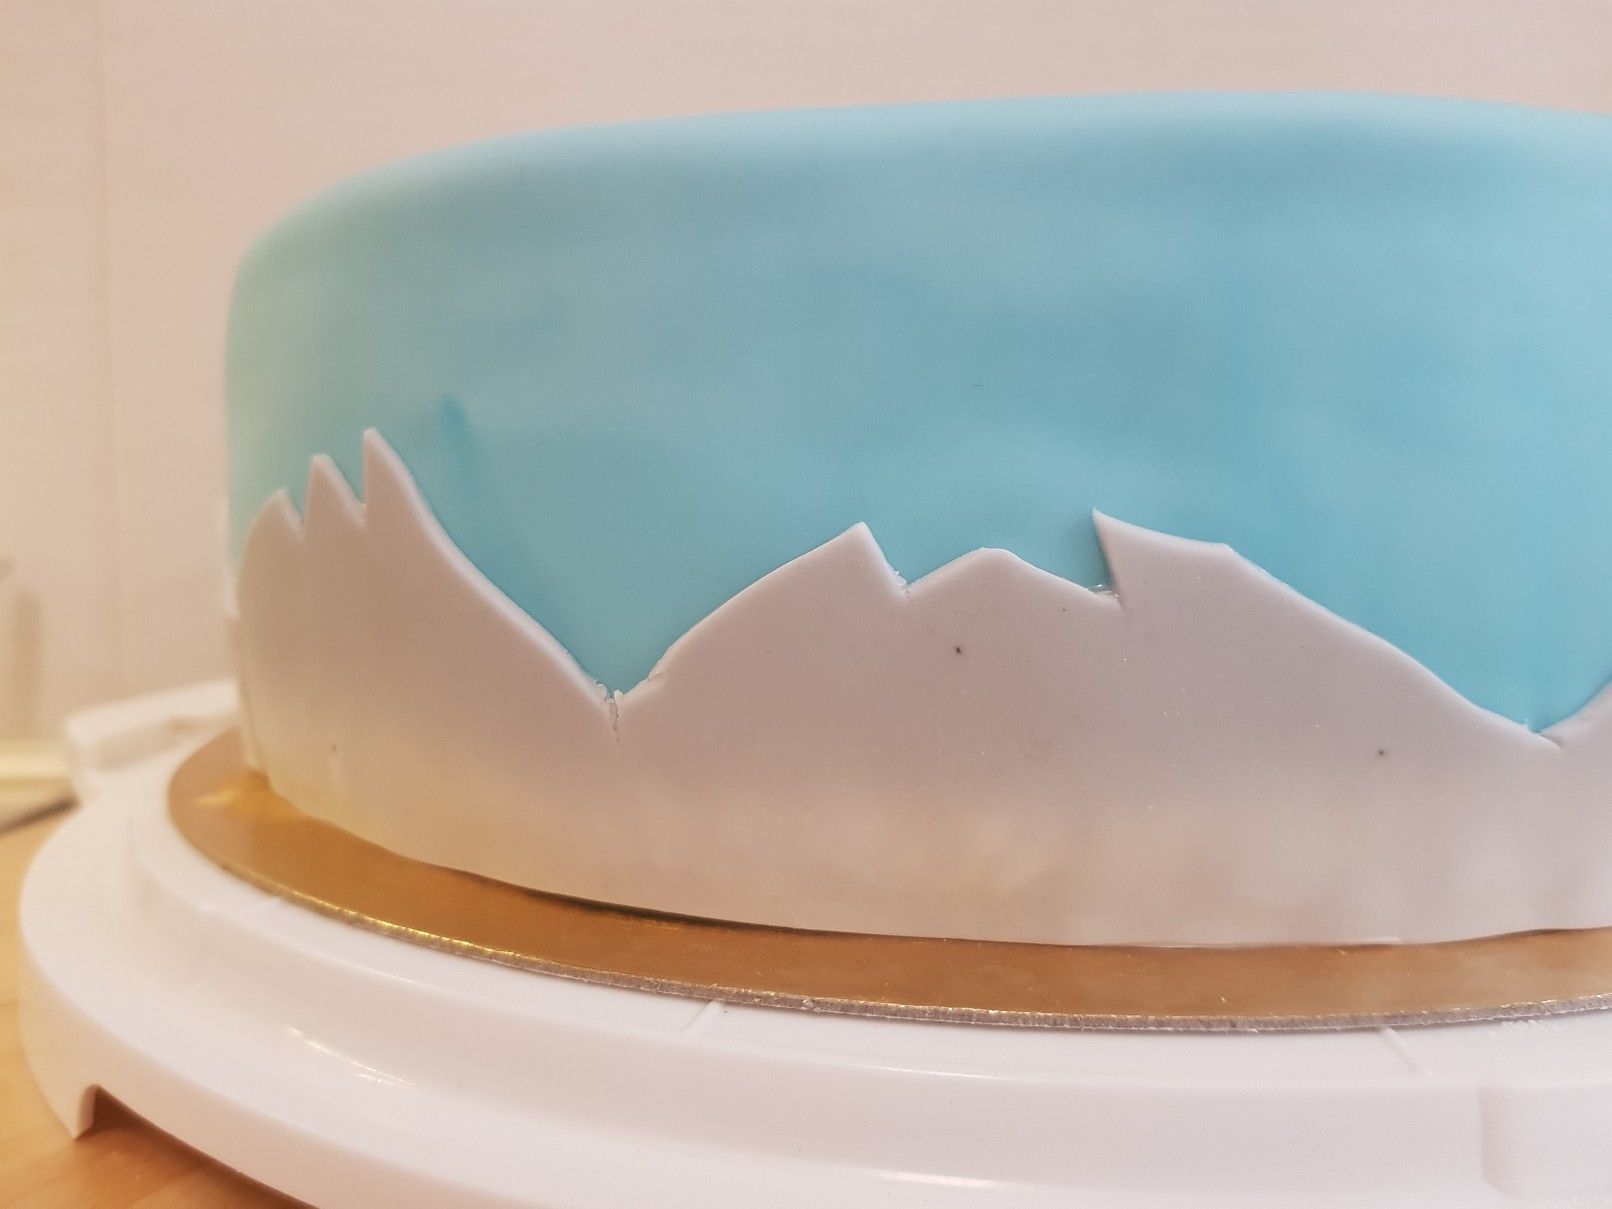 mountain birthday cake first layer